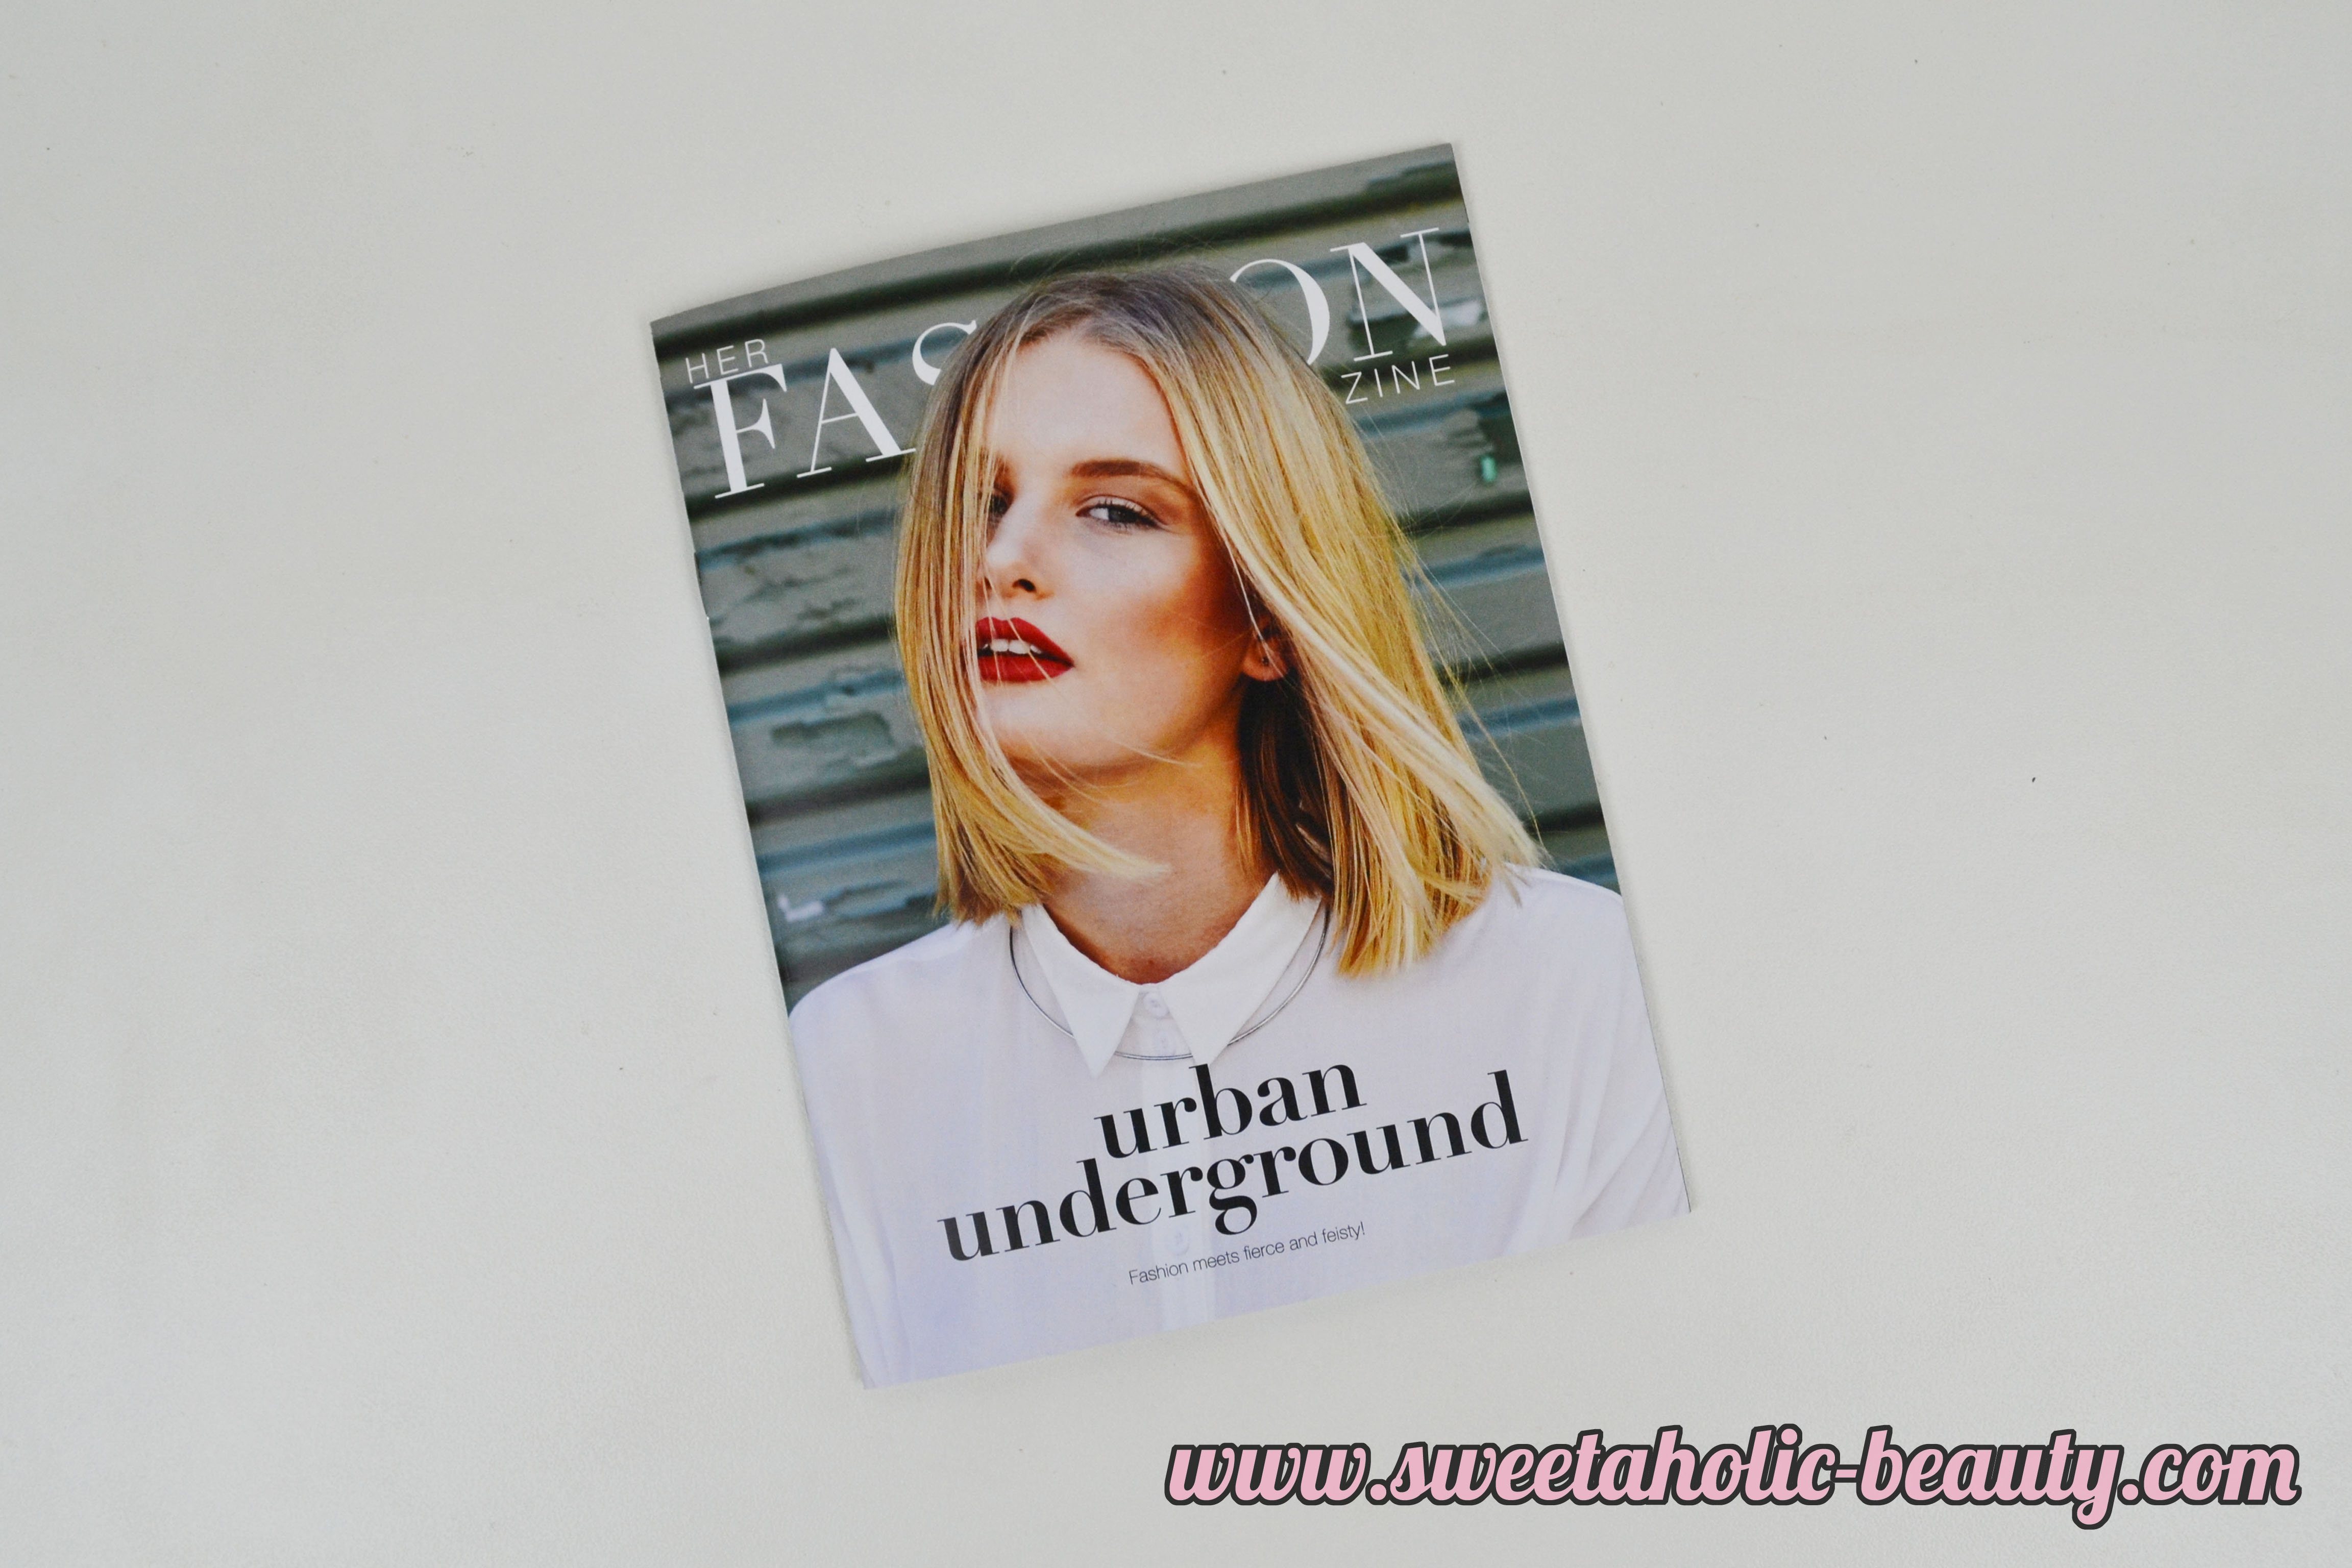 May 2015 Her Fashion Box Review - Sweetaholic Beauty